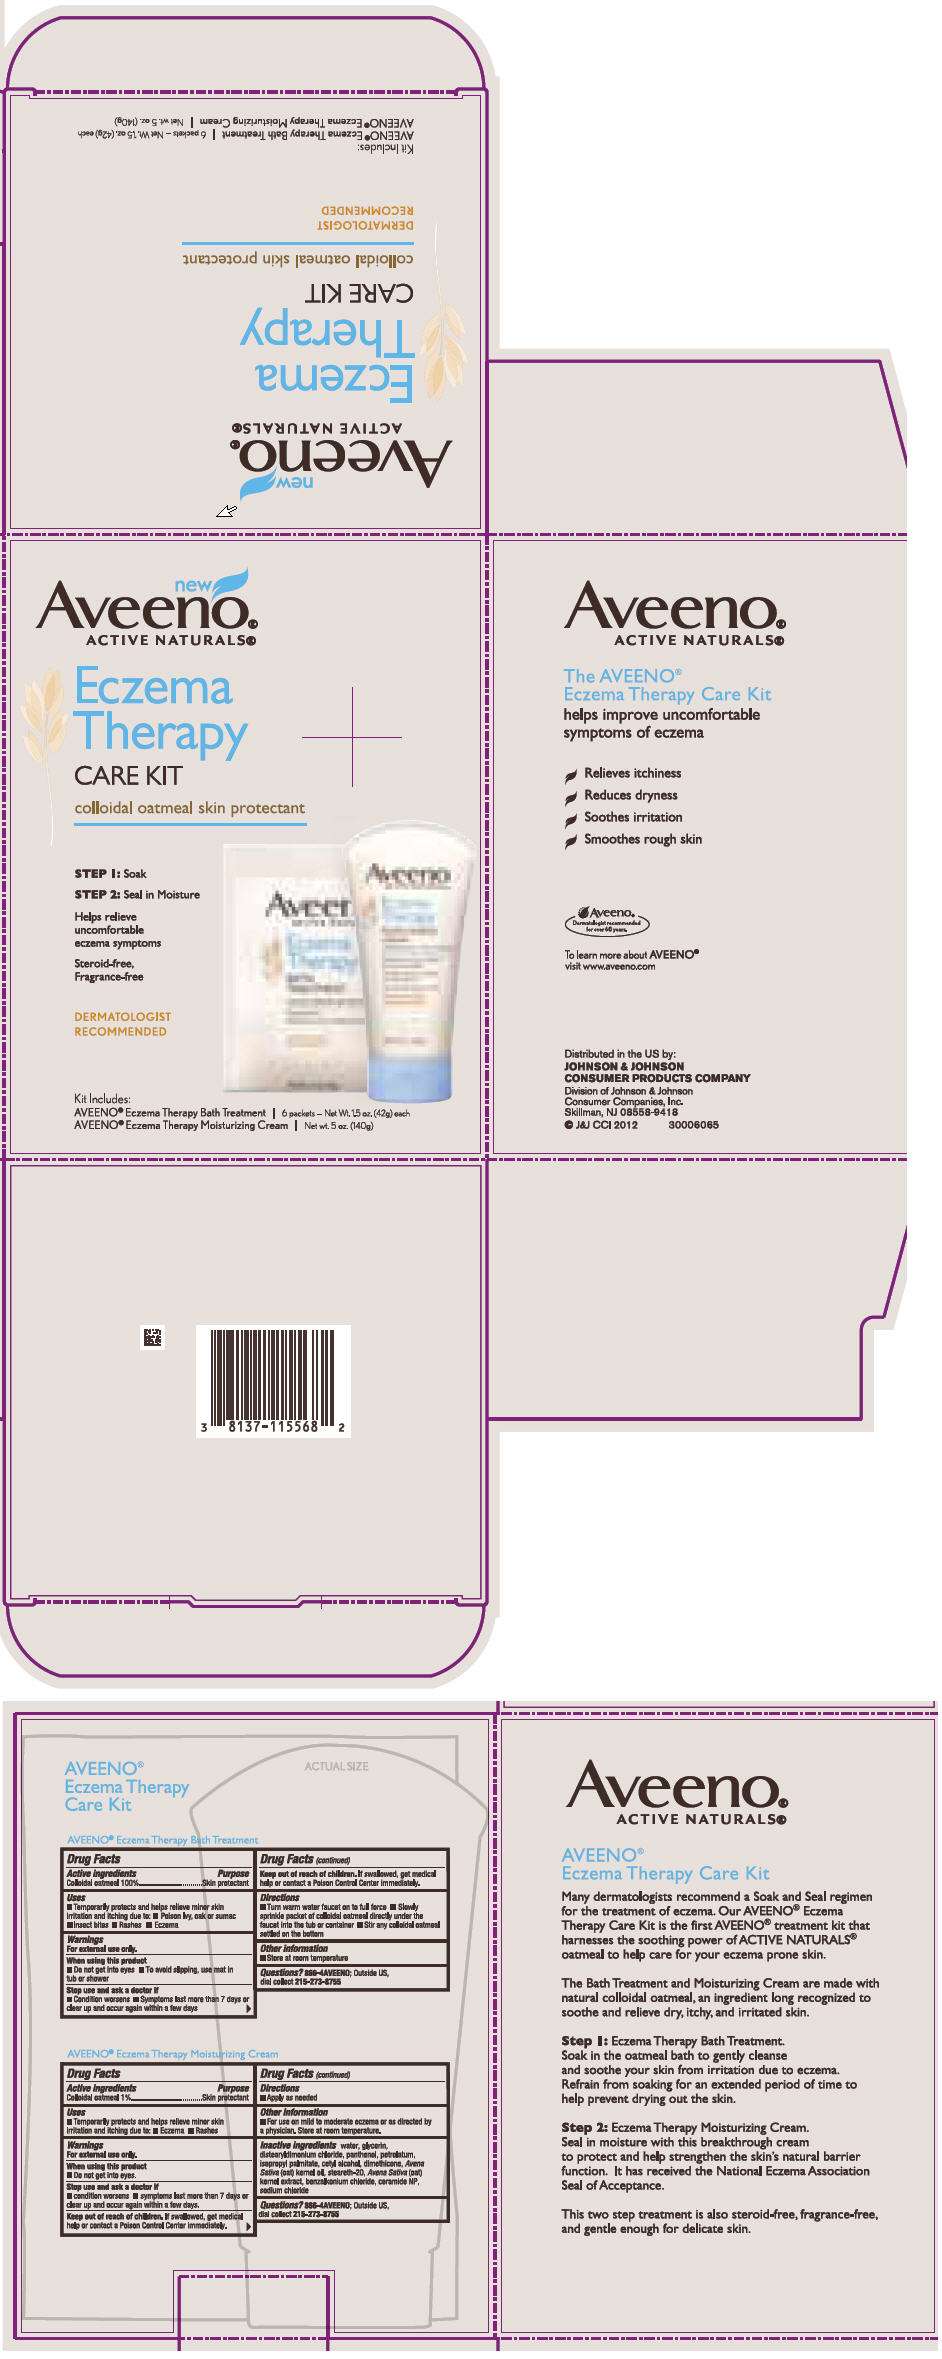 Aveeno Active Naturals Eczema Therapy Care